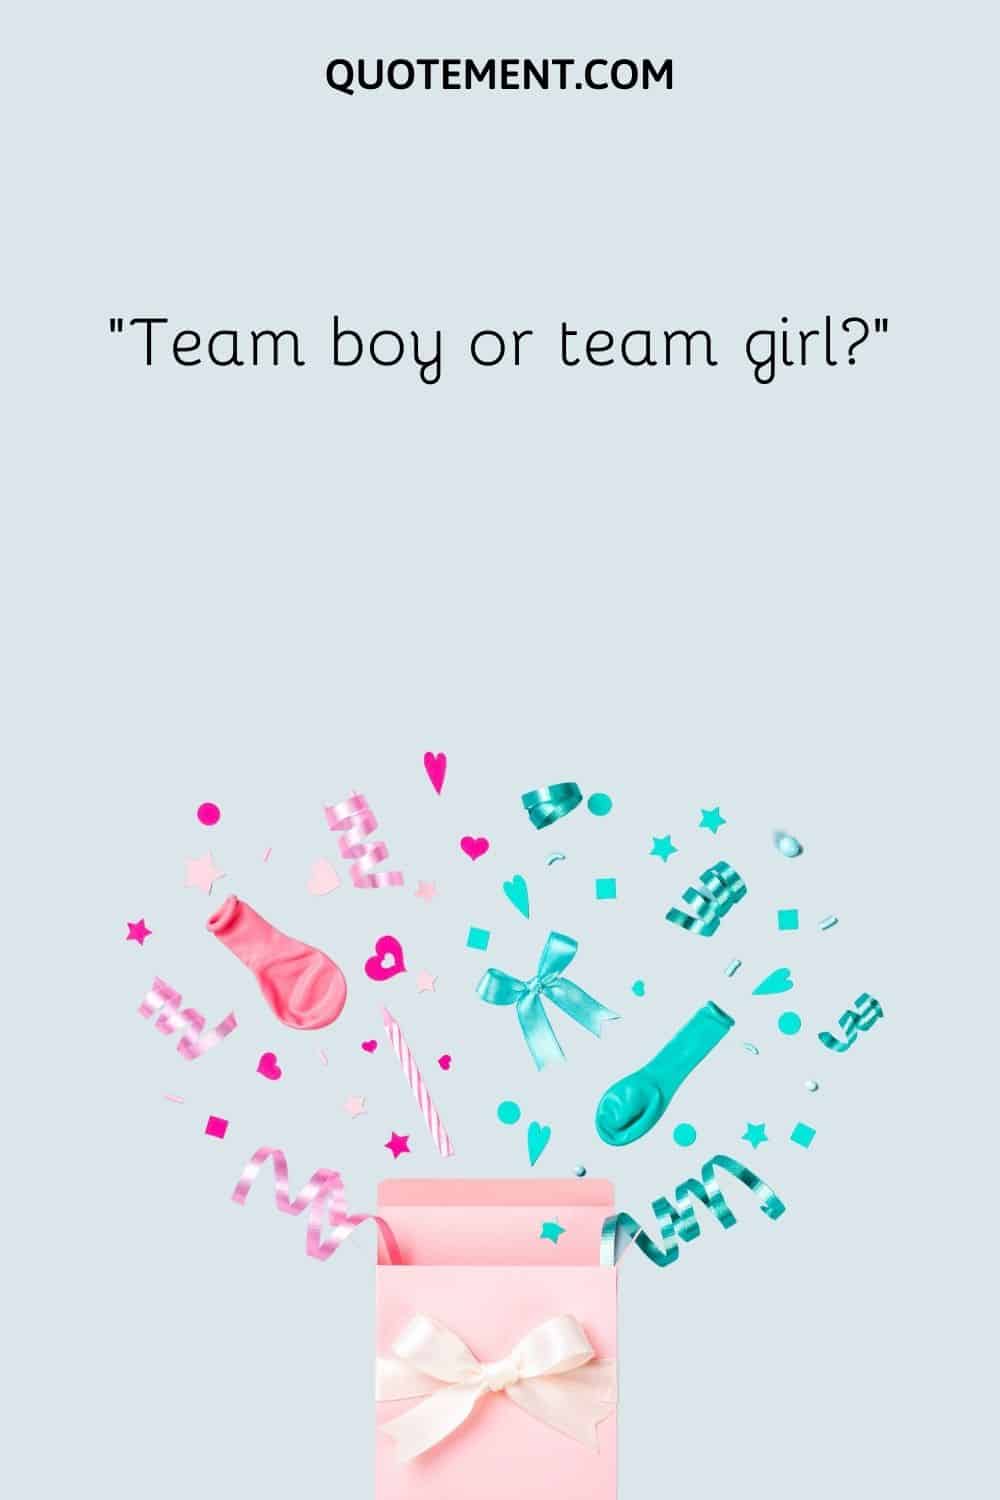 Team boy or team girl